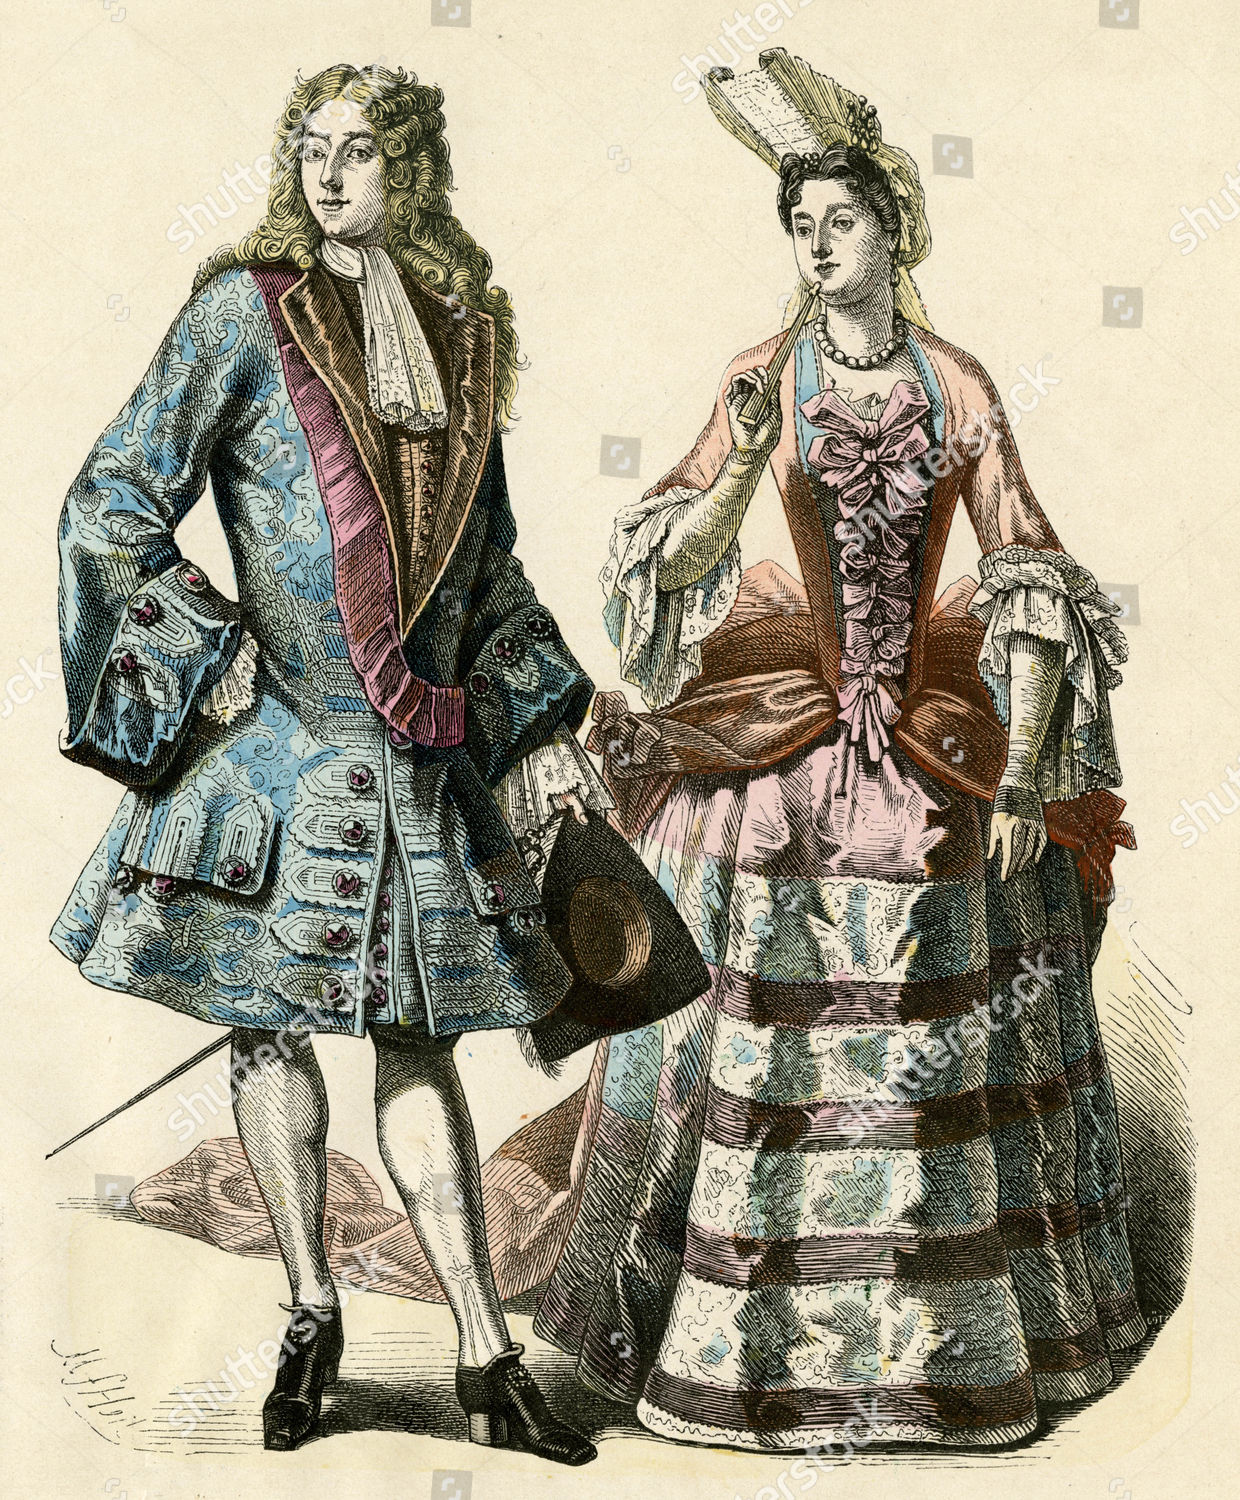 Дворянская одежда и облик дворянина при петре